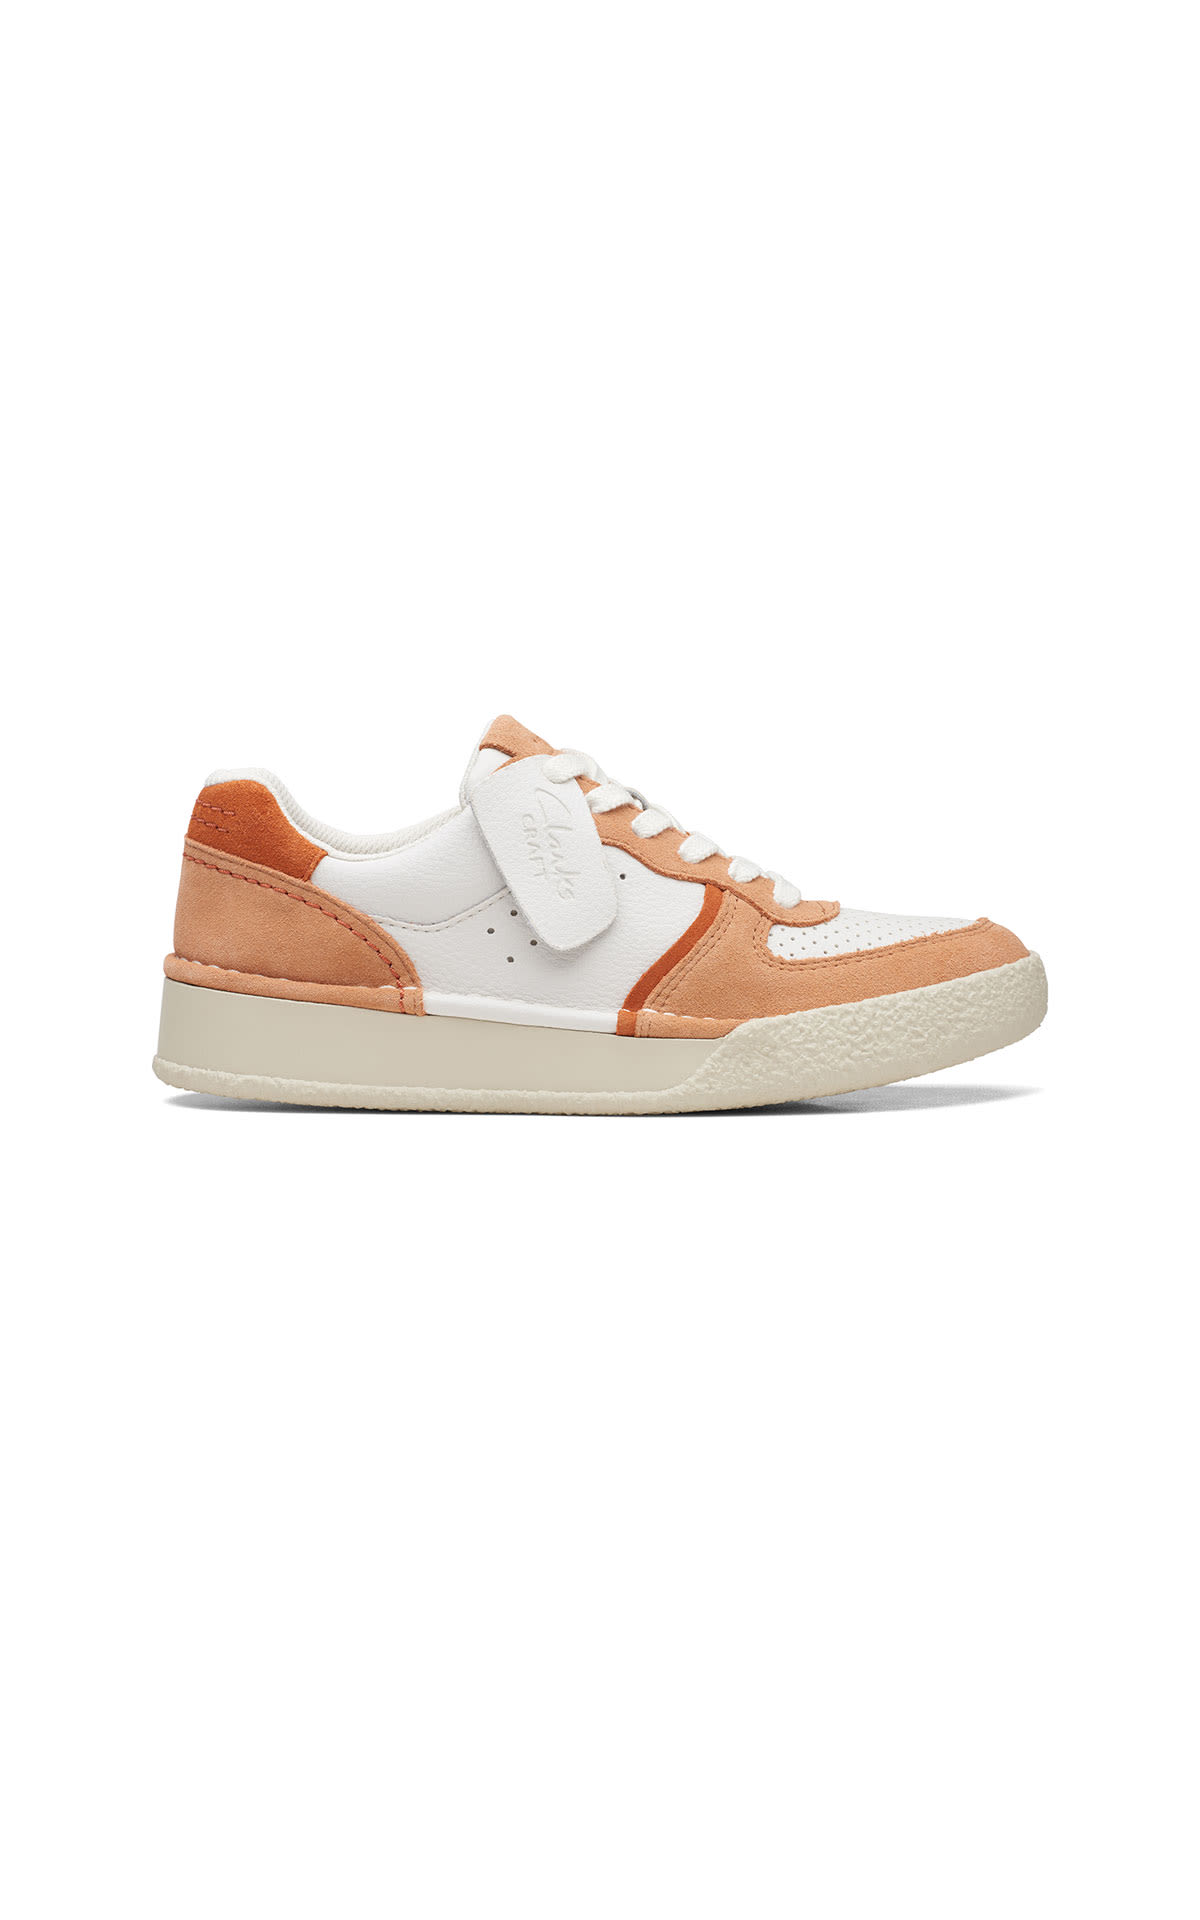 white and orange sneaker clarks